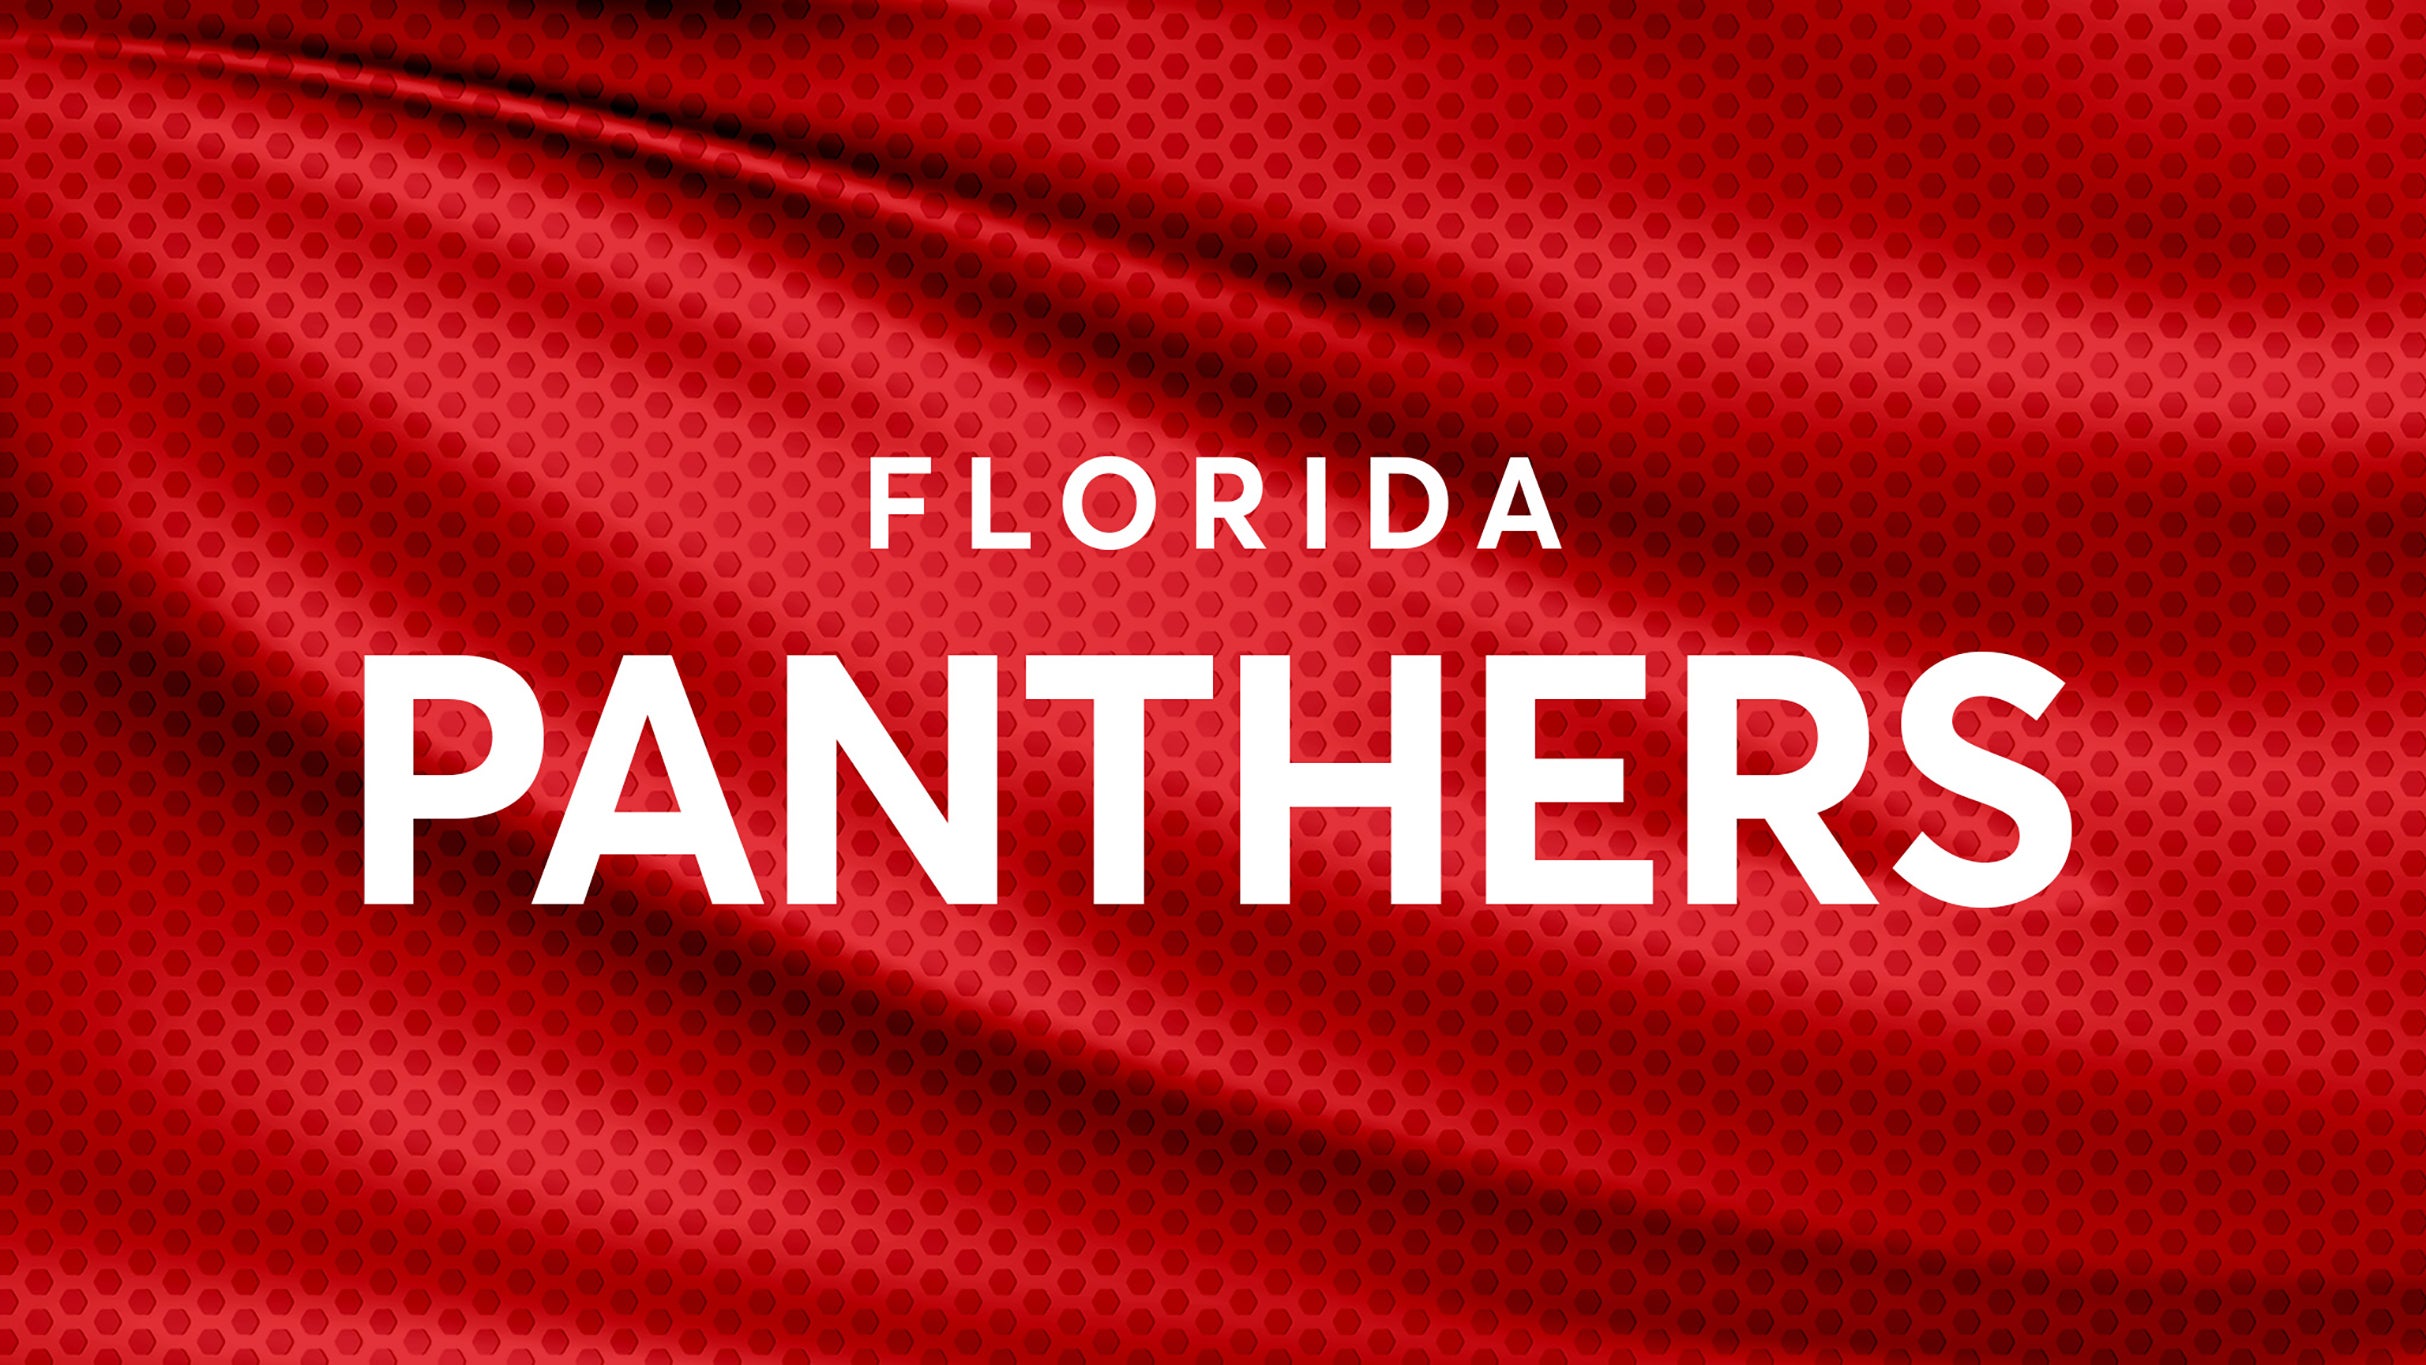 Florida Panthers vs. Nashville Predators